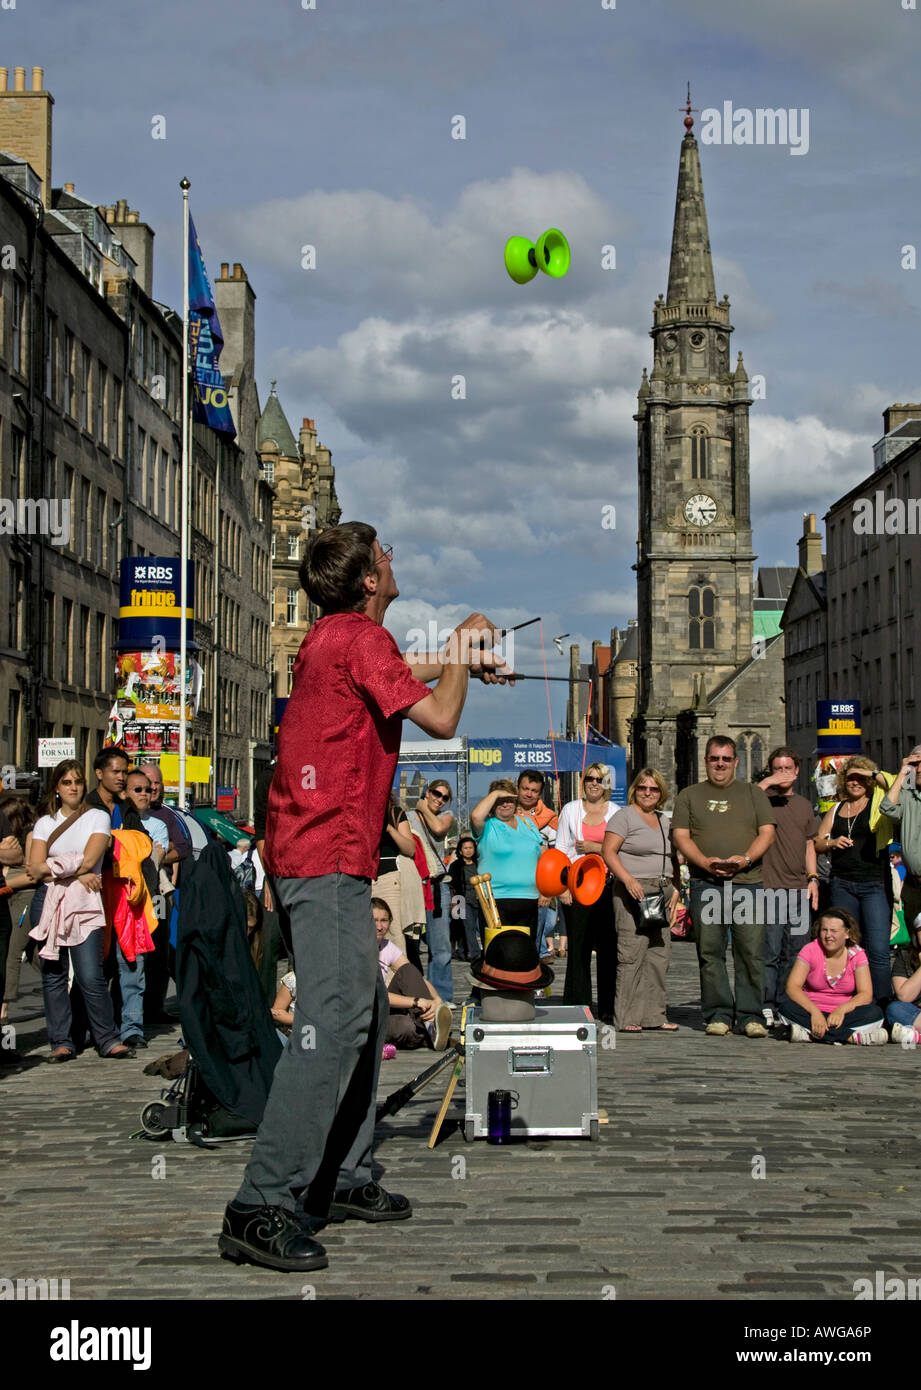 Street Performer, entertaining with diablo, Edinburgh Fringe Festival, Scotland, UK, Europe Stock Photo